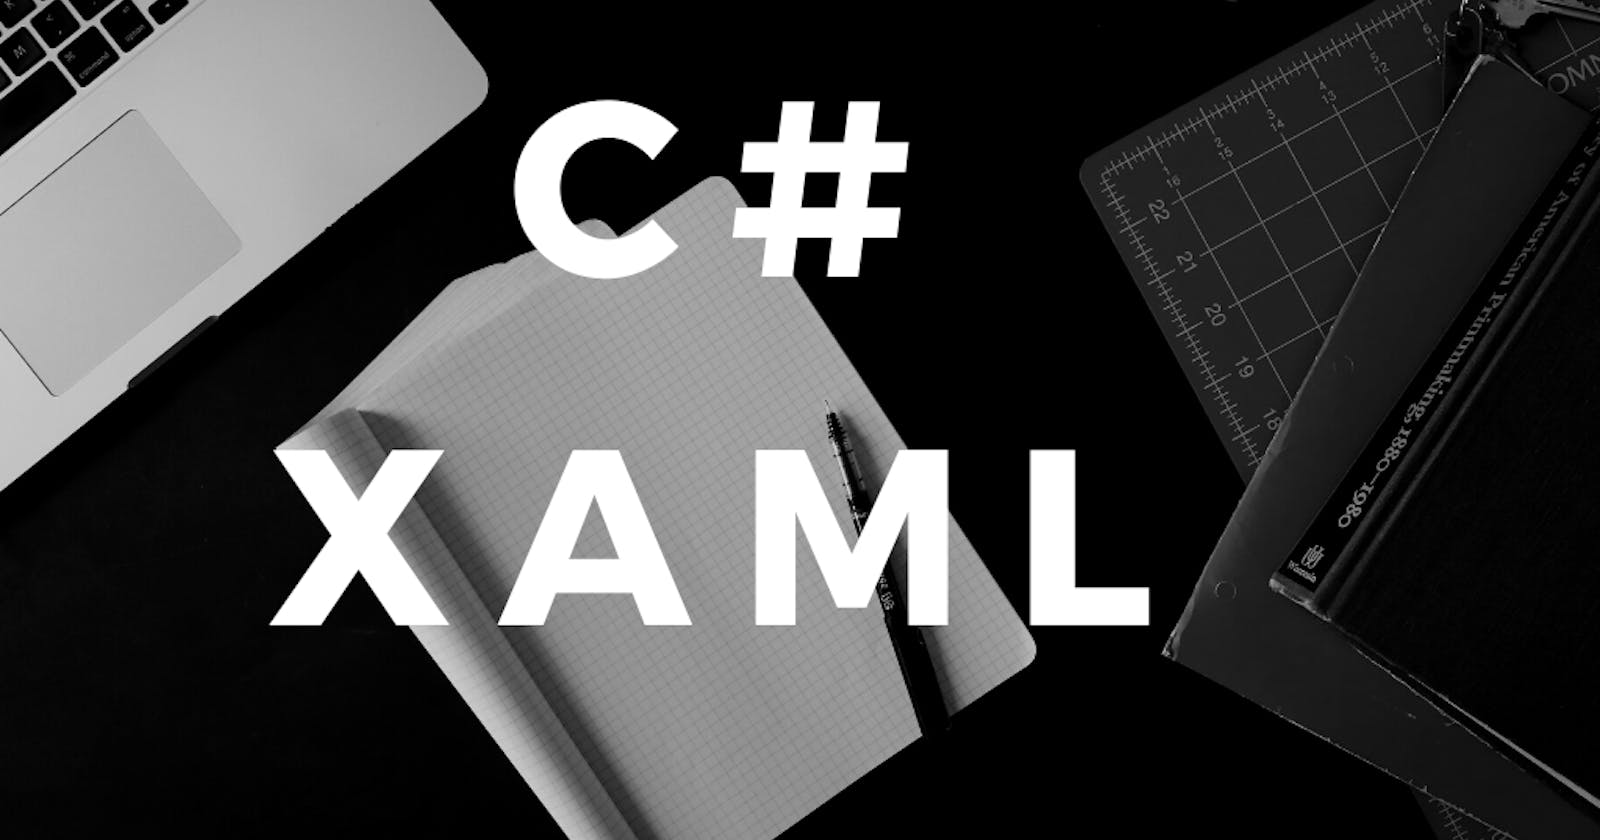 C# and XAML